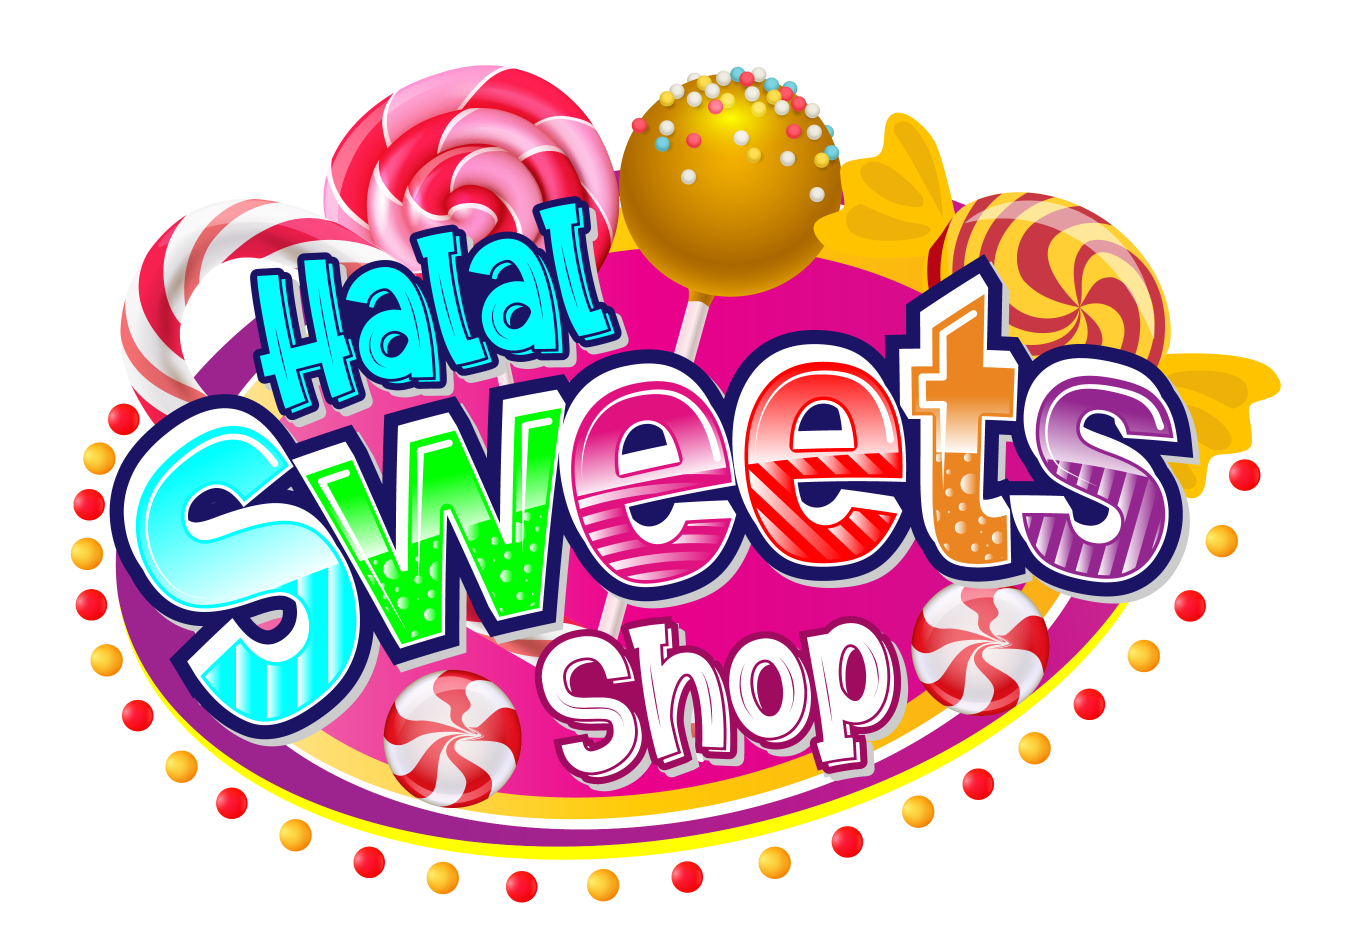 Halal sweets shops achtergrond